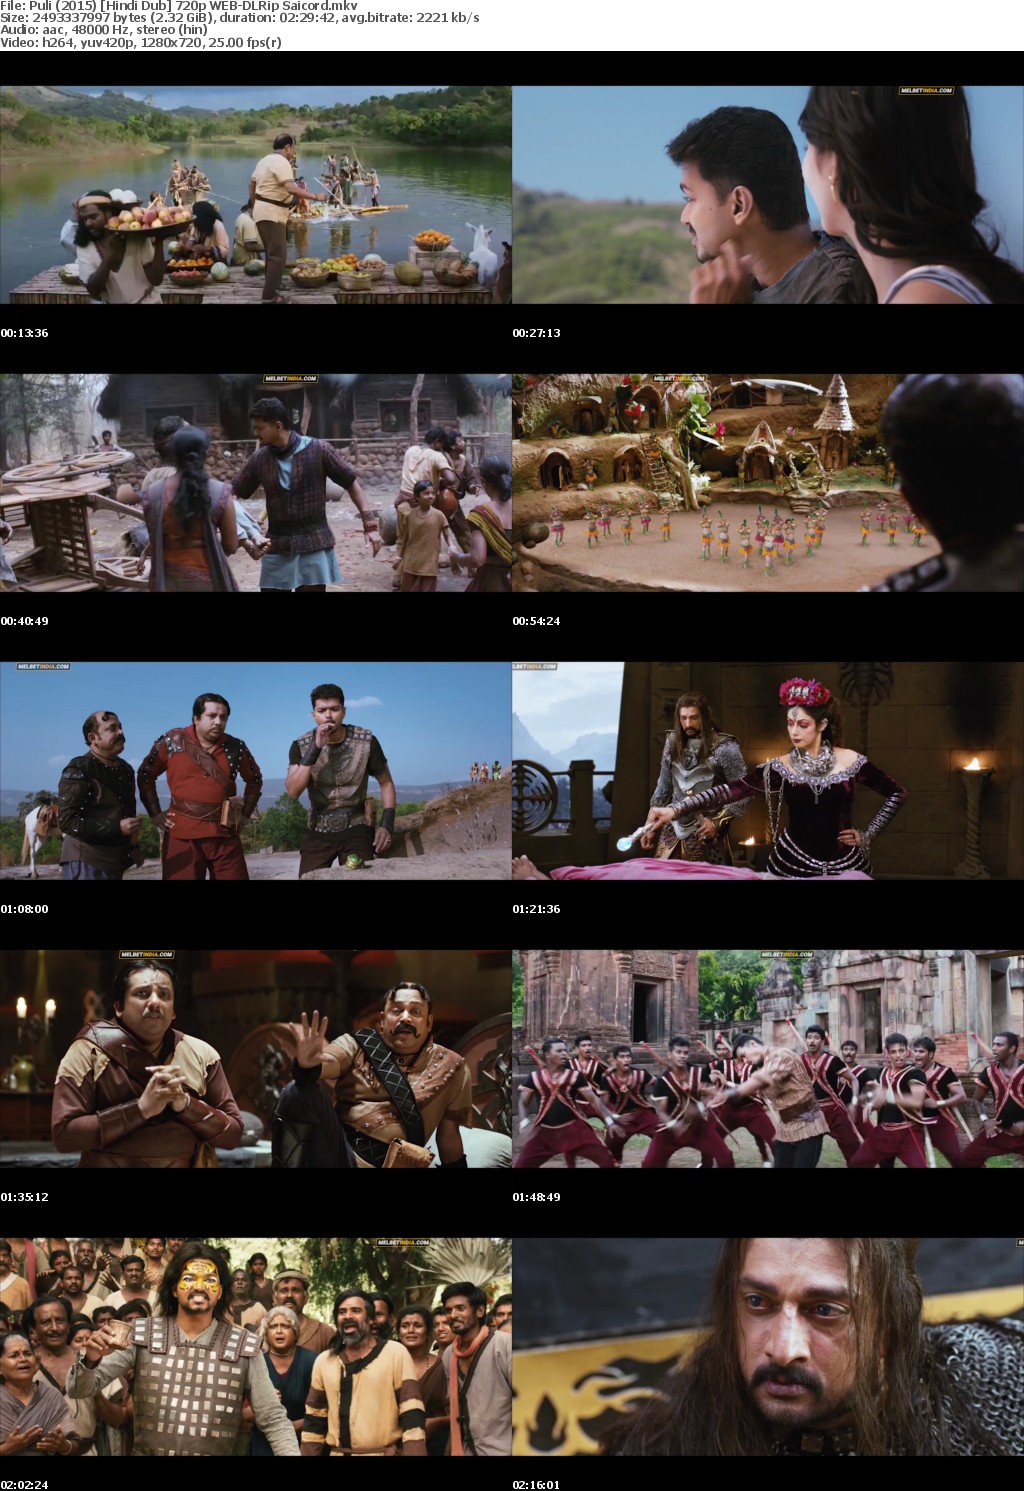 Puli (2015) Hindi Dub 720p WEB-DLRip Saicord